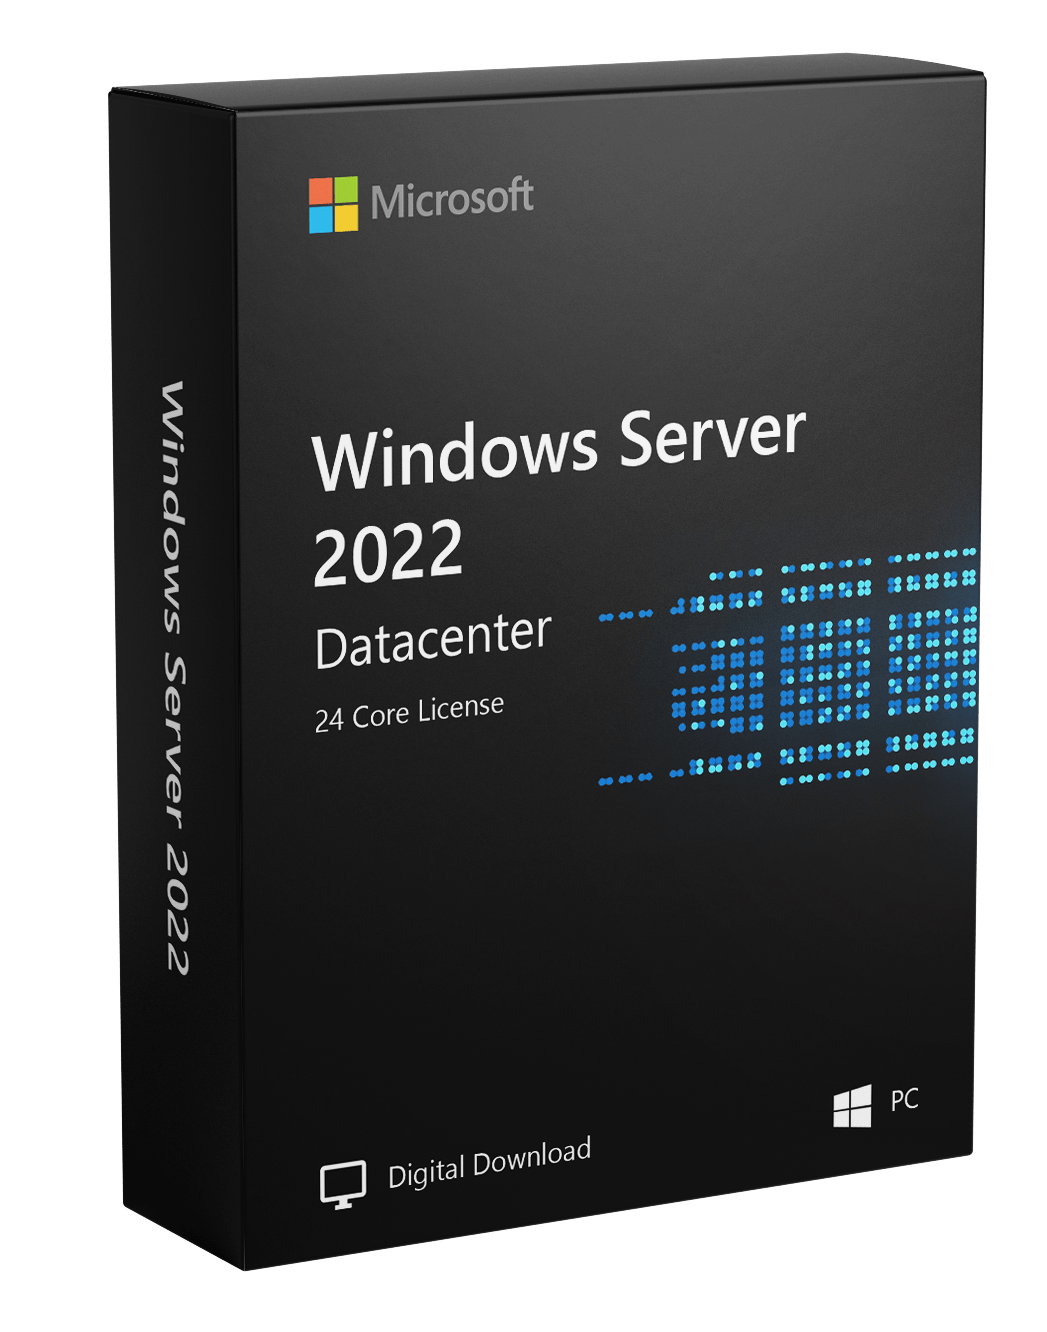 Microsoft Software Windows Server 2022 Datacenter - 24 Core License box